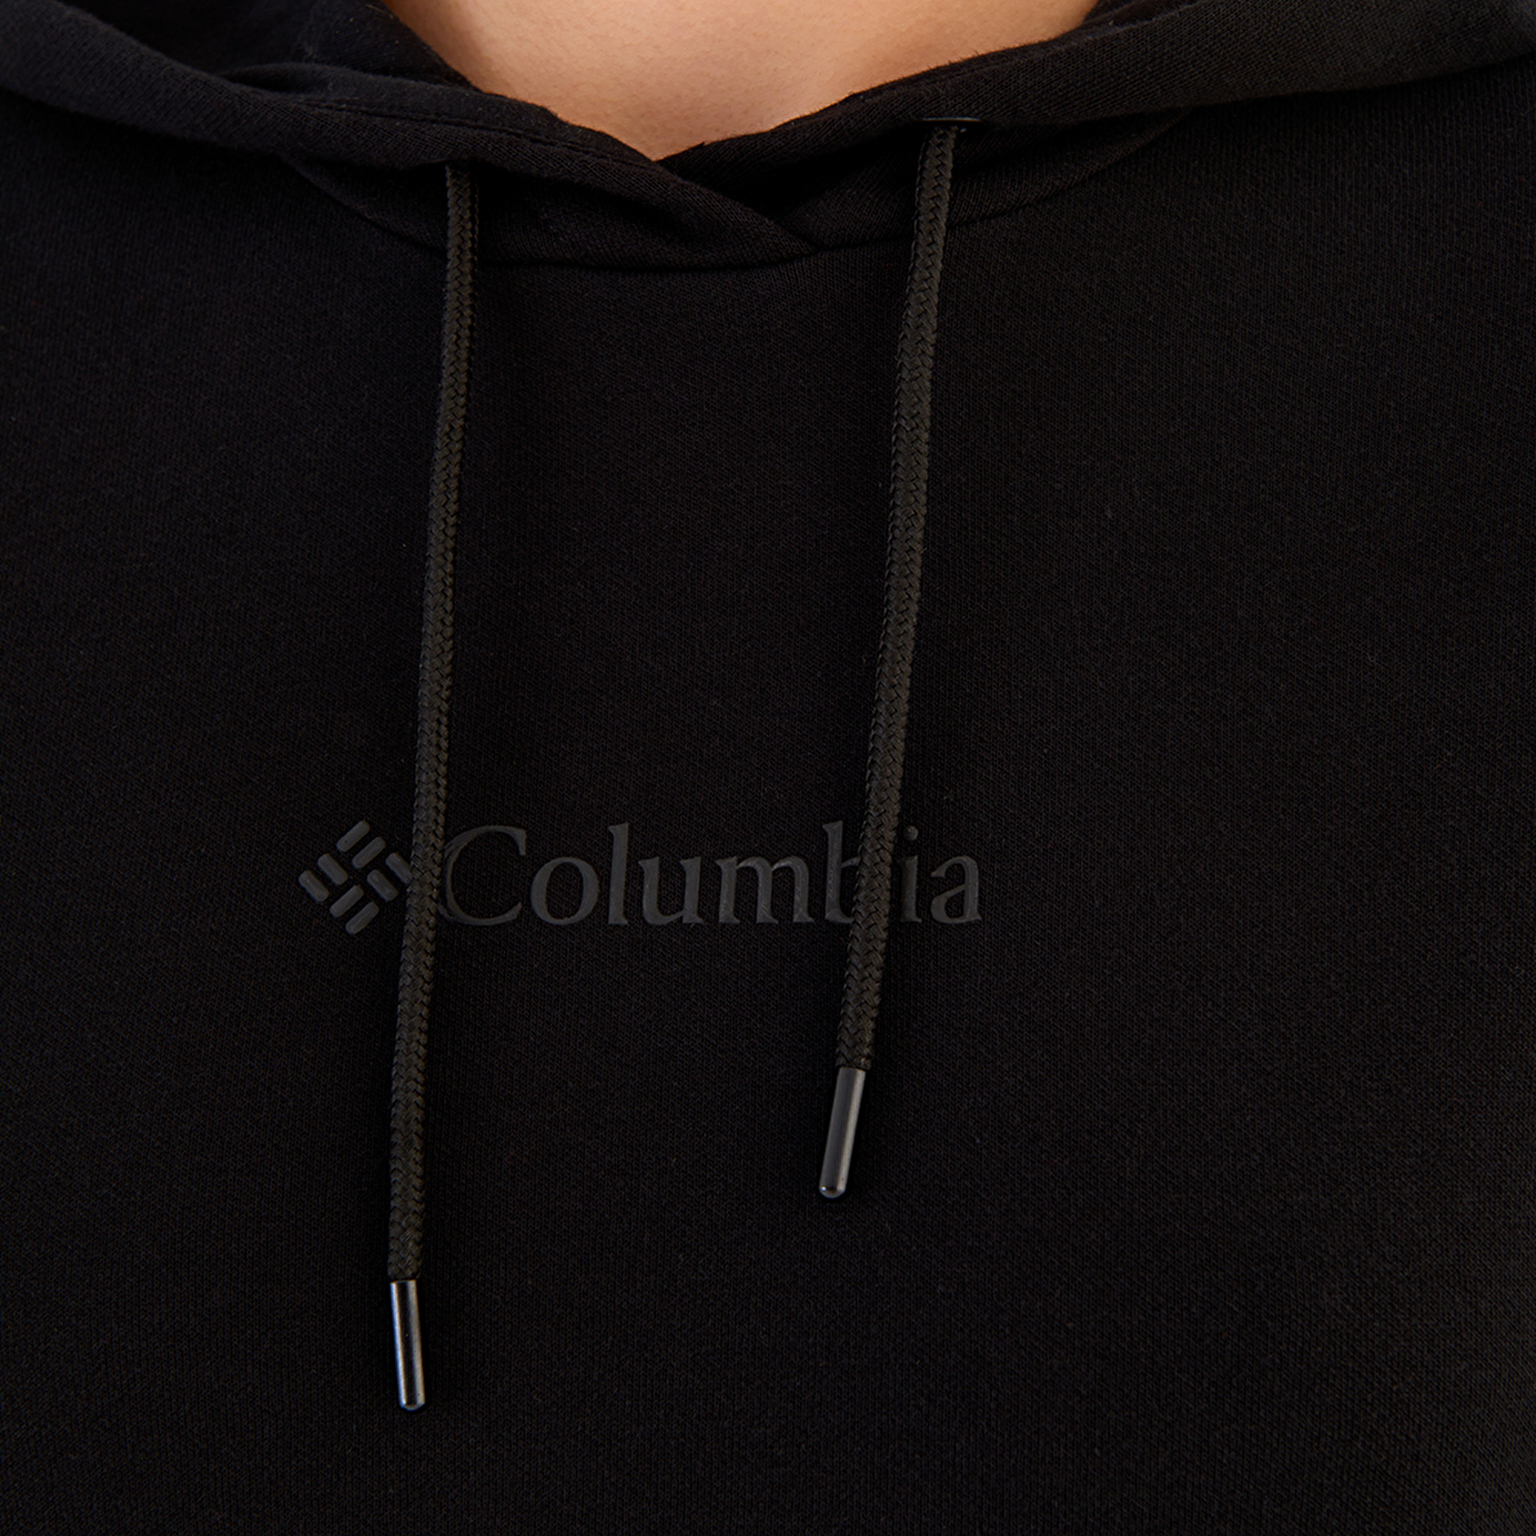 CSC Columbia Chest Logo Kadin Kapüşonlu Sweatshirt